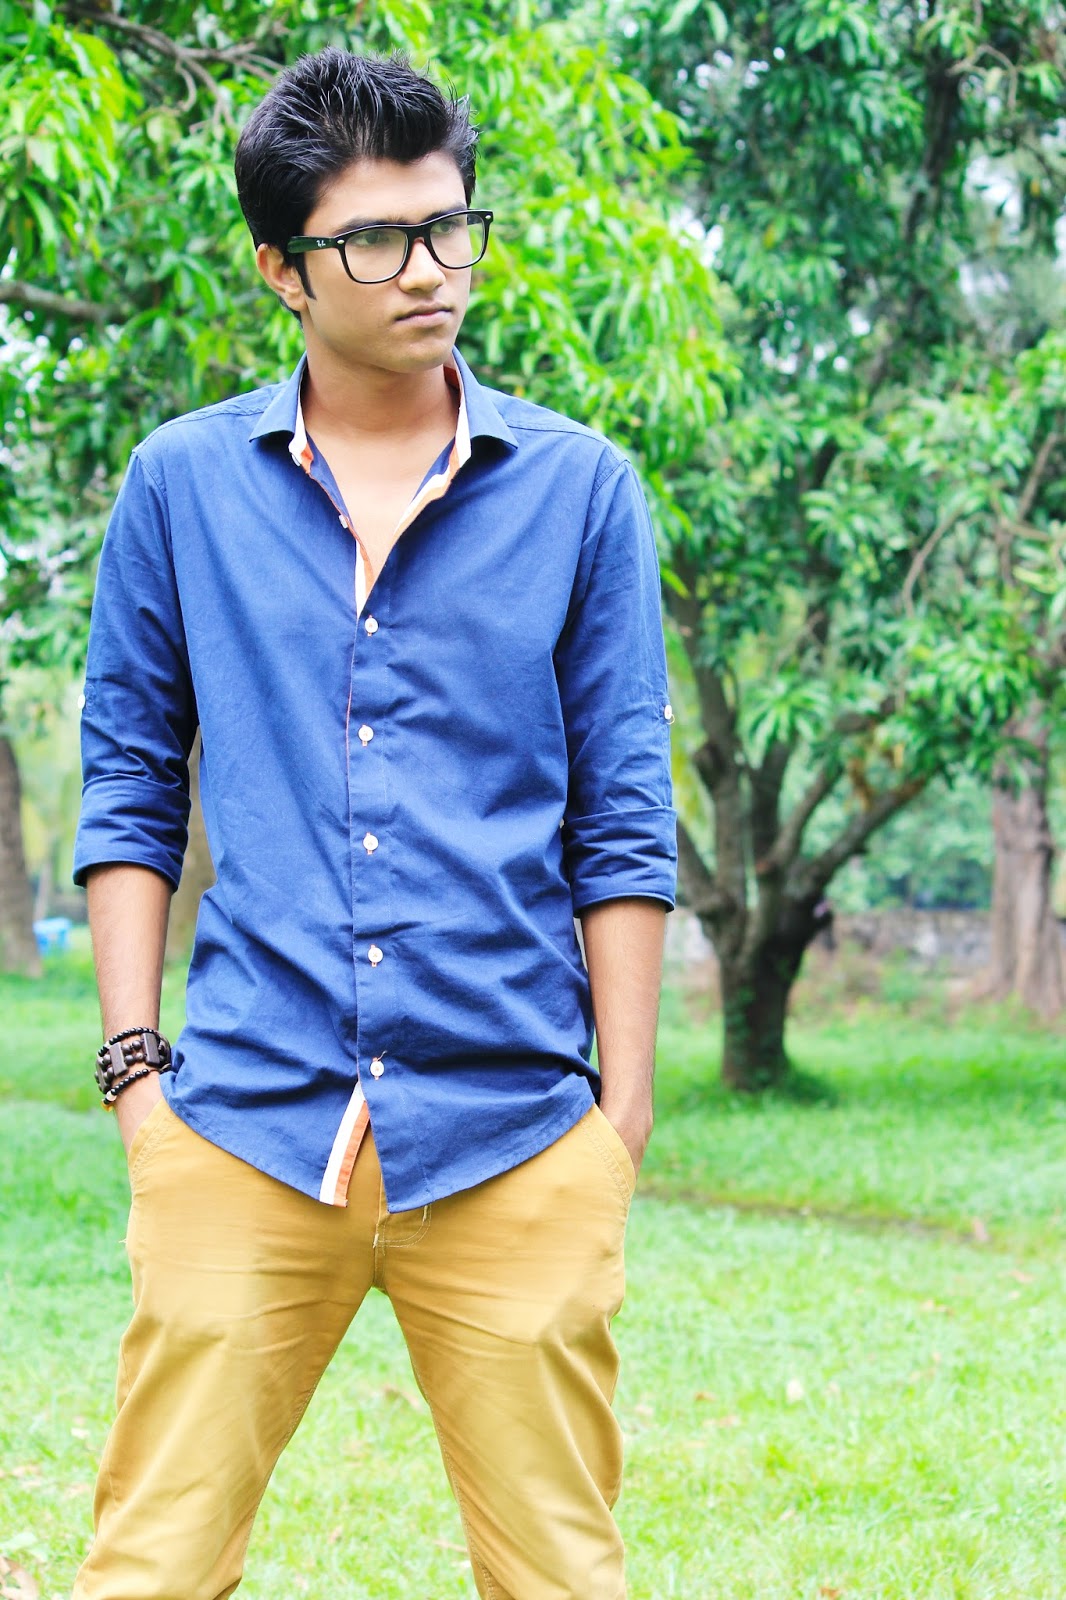 facebook profile pic by Samrat Khan - Best bangla Photoshop Tutorial blog,